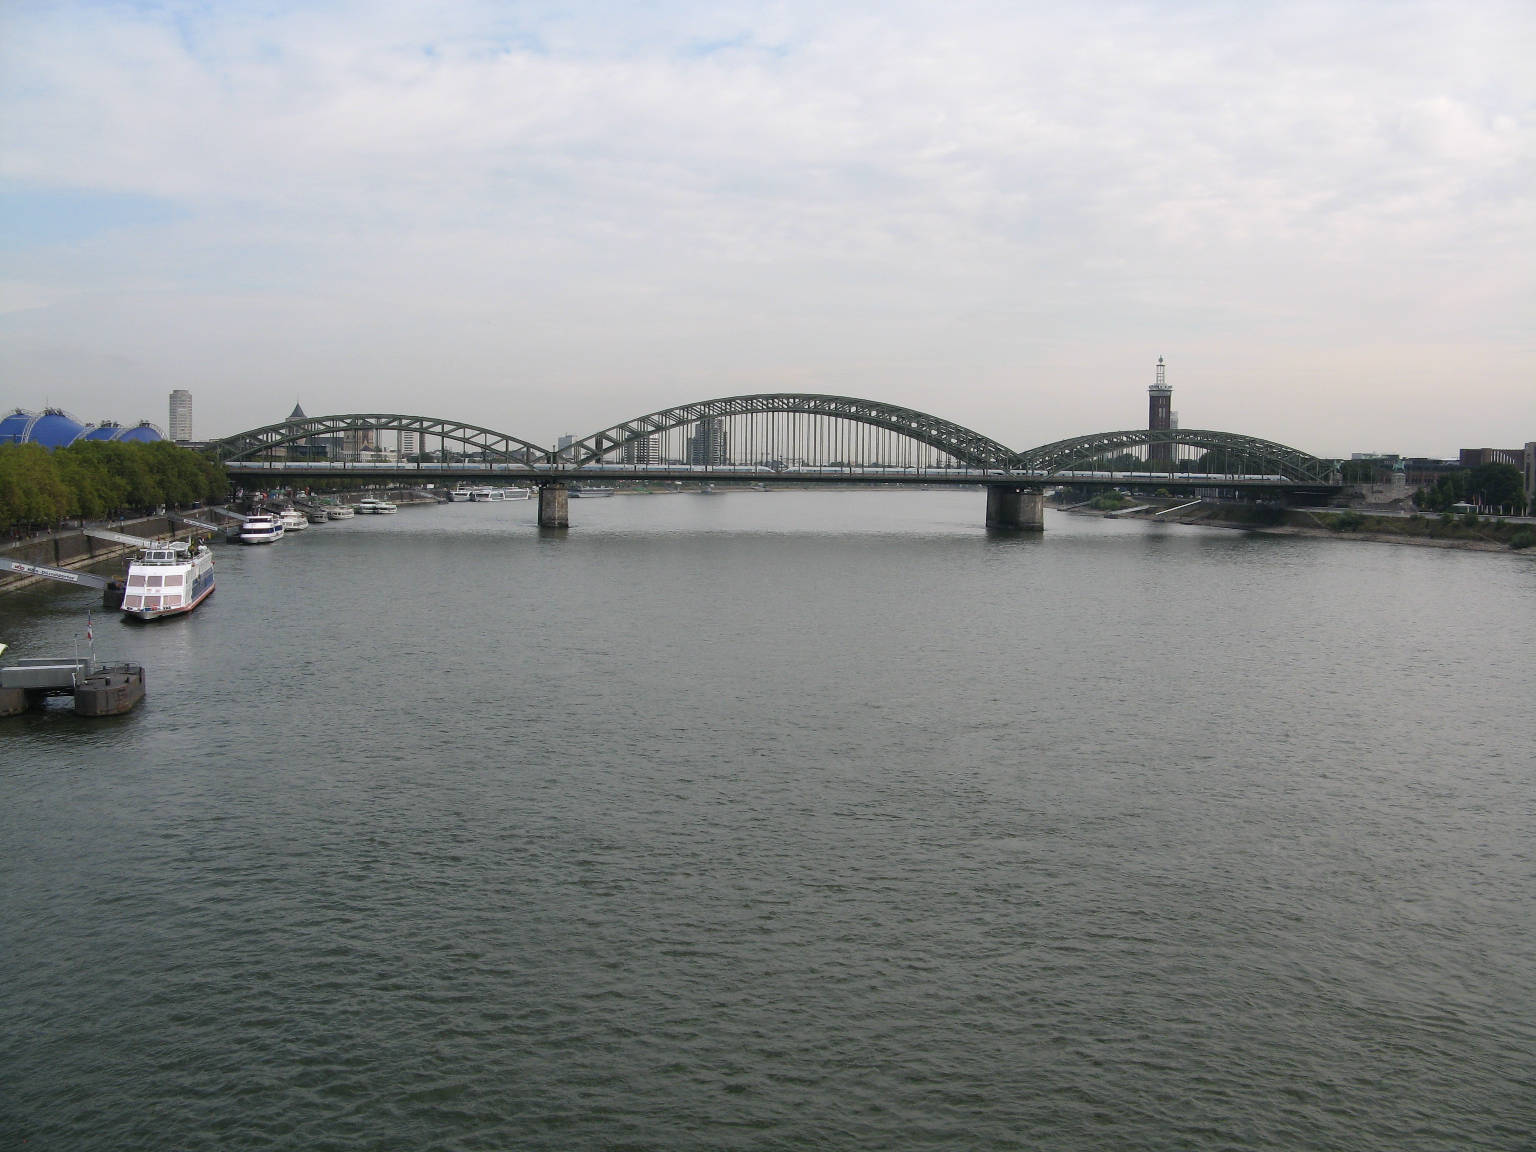 The Hohenzollern Bridge across the Rhine